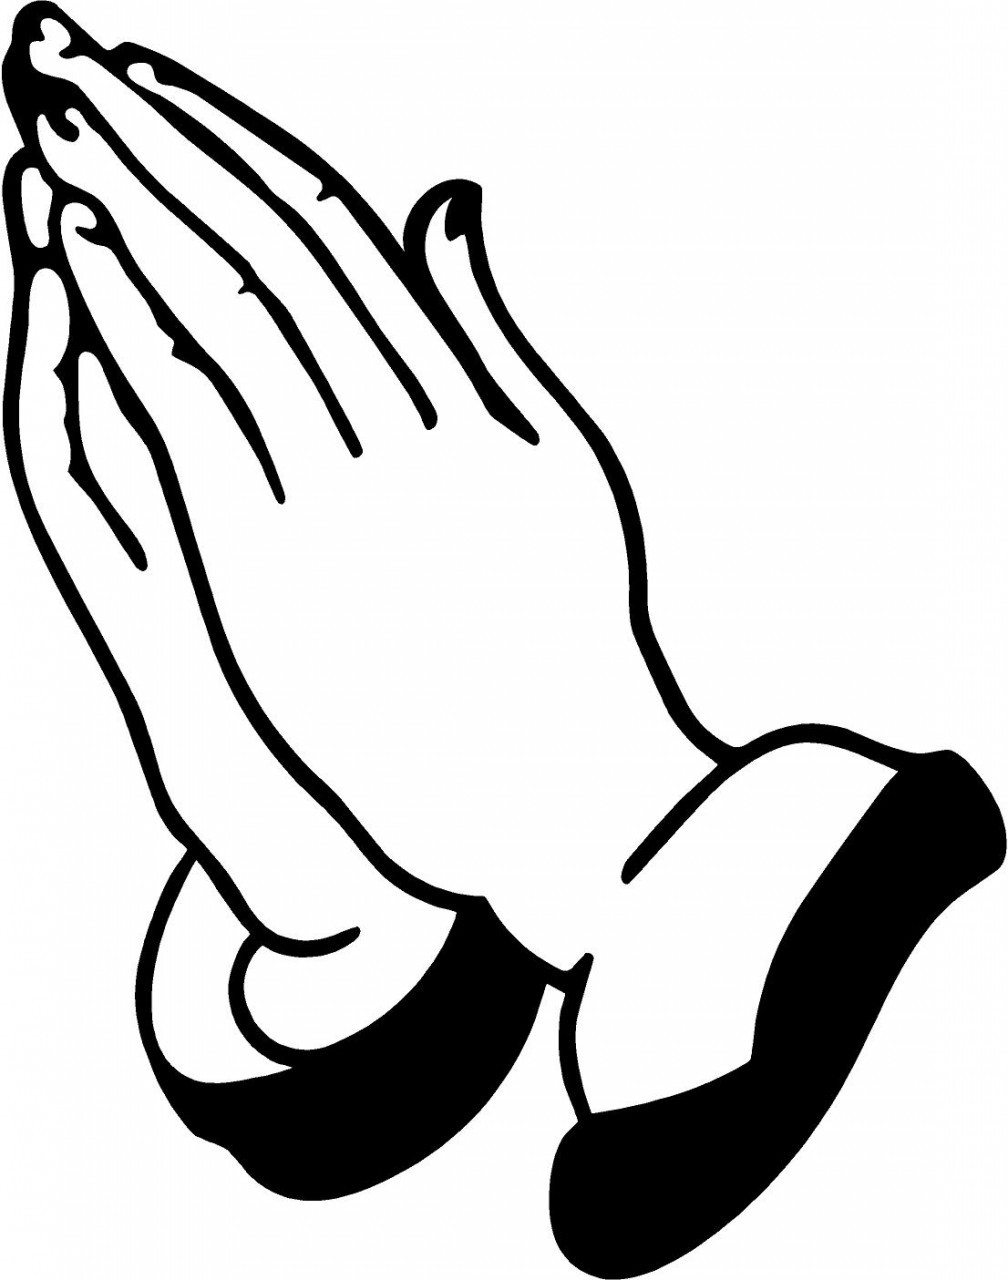 Praying hands praying hand child prayer hands clip art